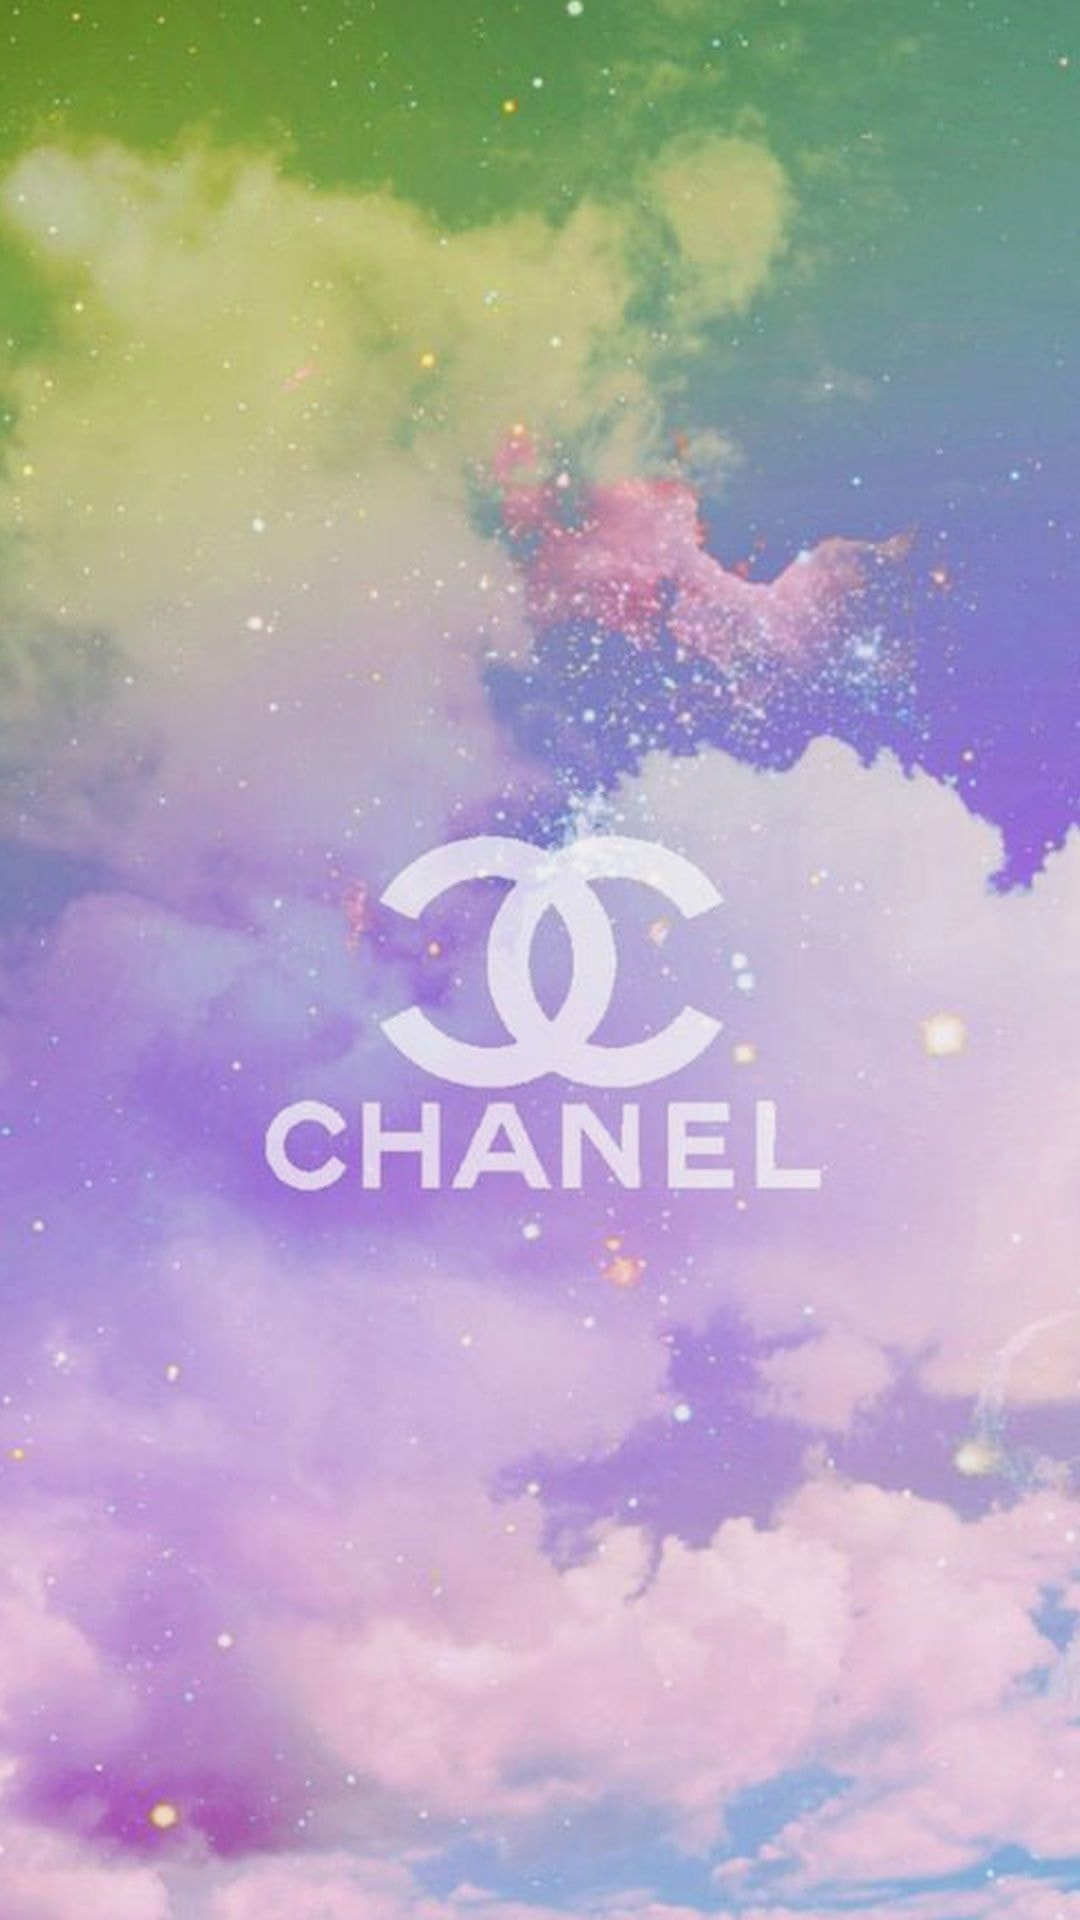 Chanel ガーリーなスマホ壁紙 Iphone Wallpapers